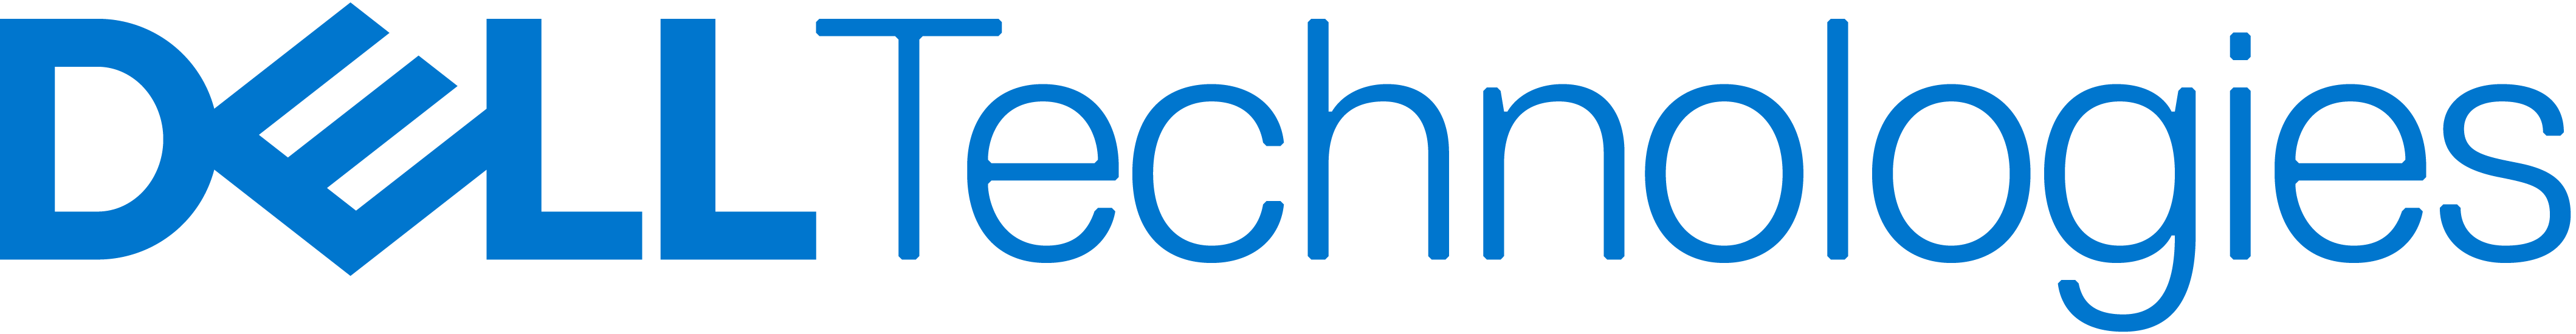 DellTech_Logo_Prm_Blue_rgb.png